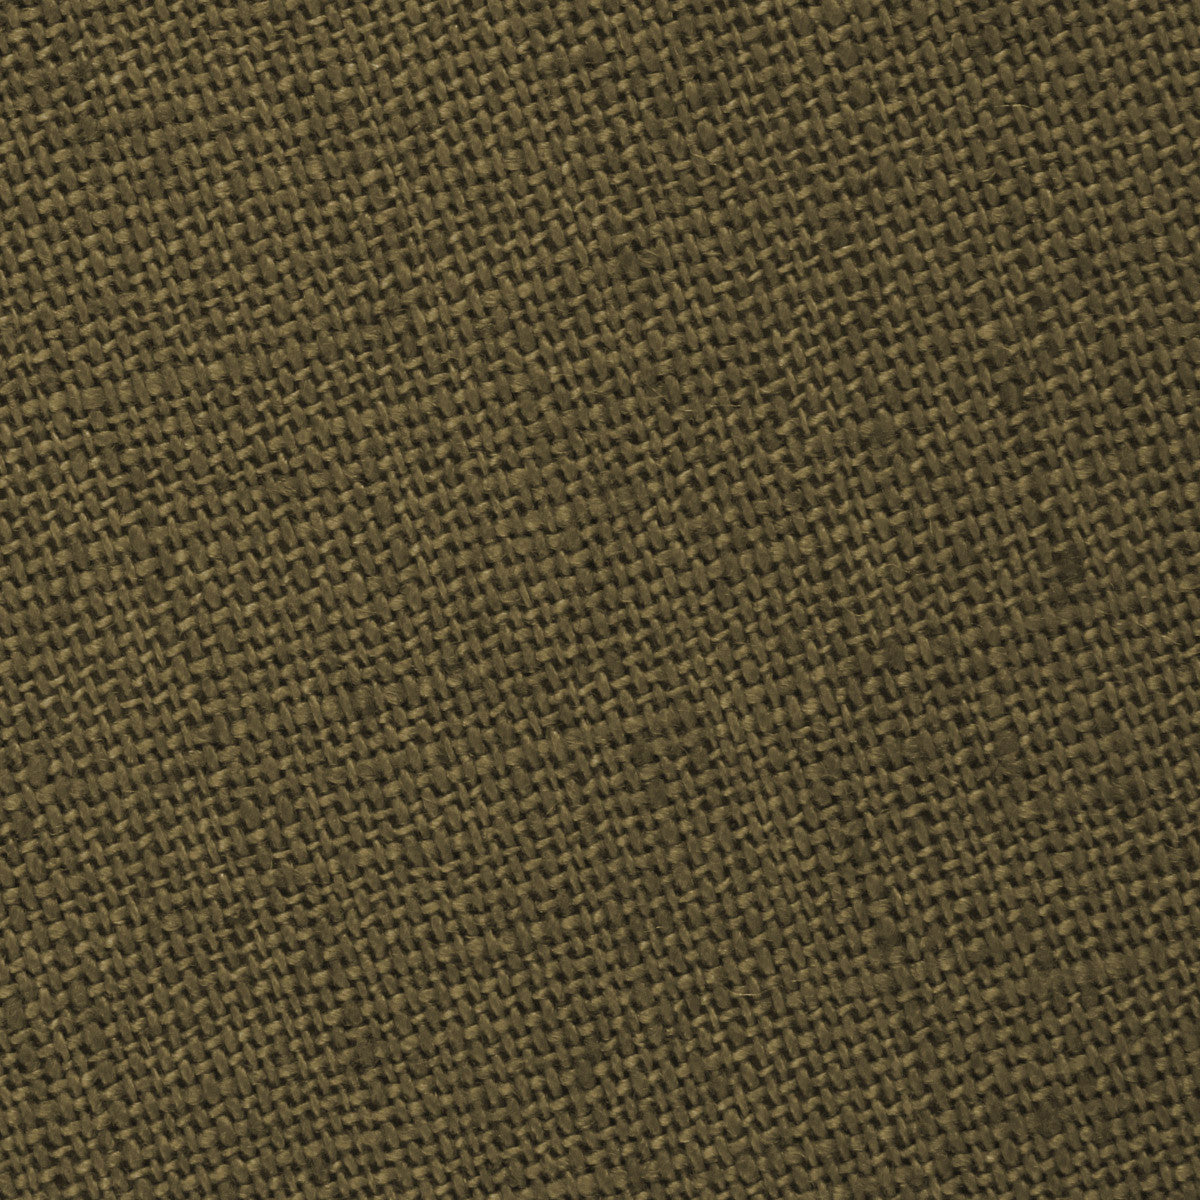 Dry Green Khaki Linen Fabric Skinny Tie